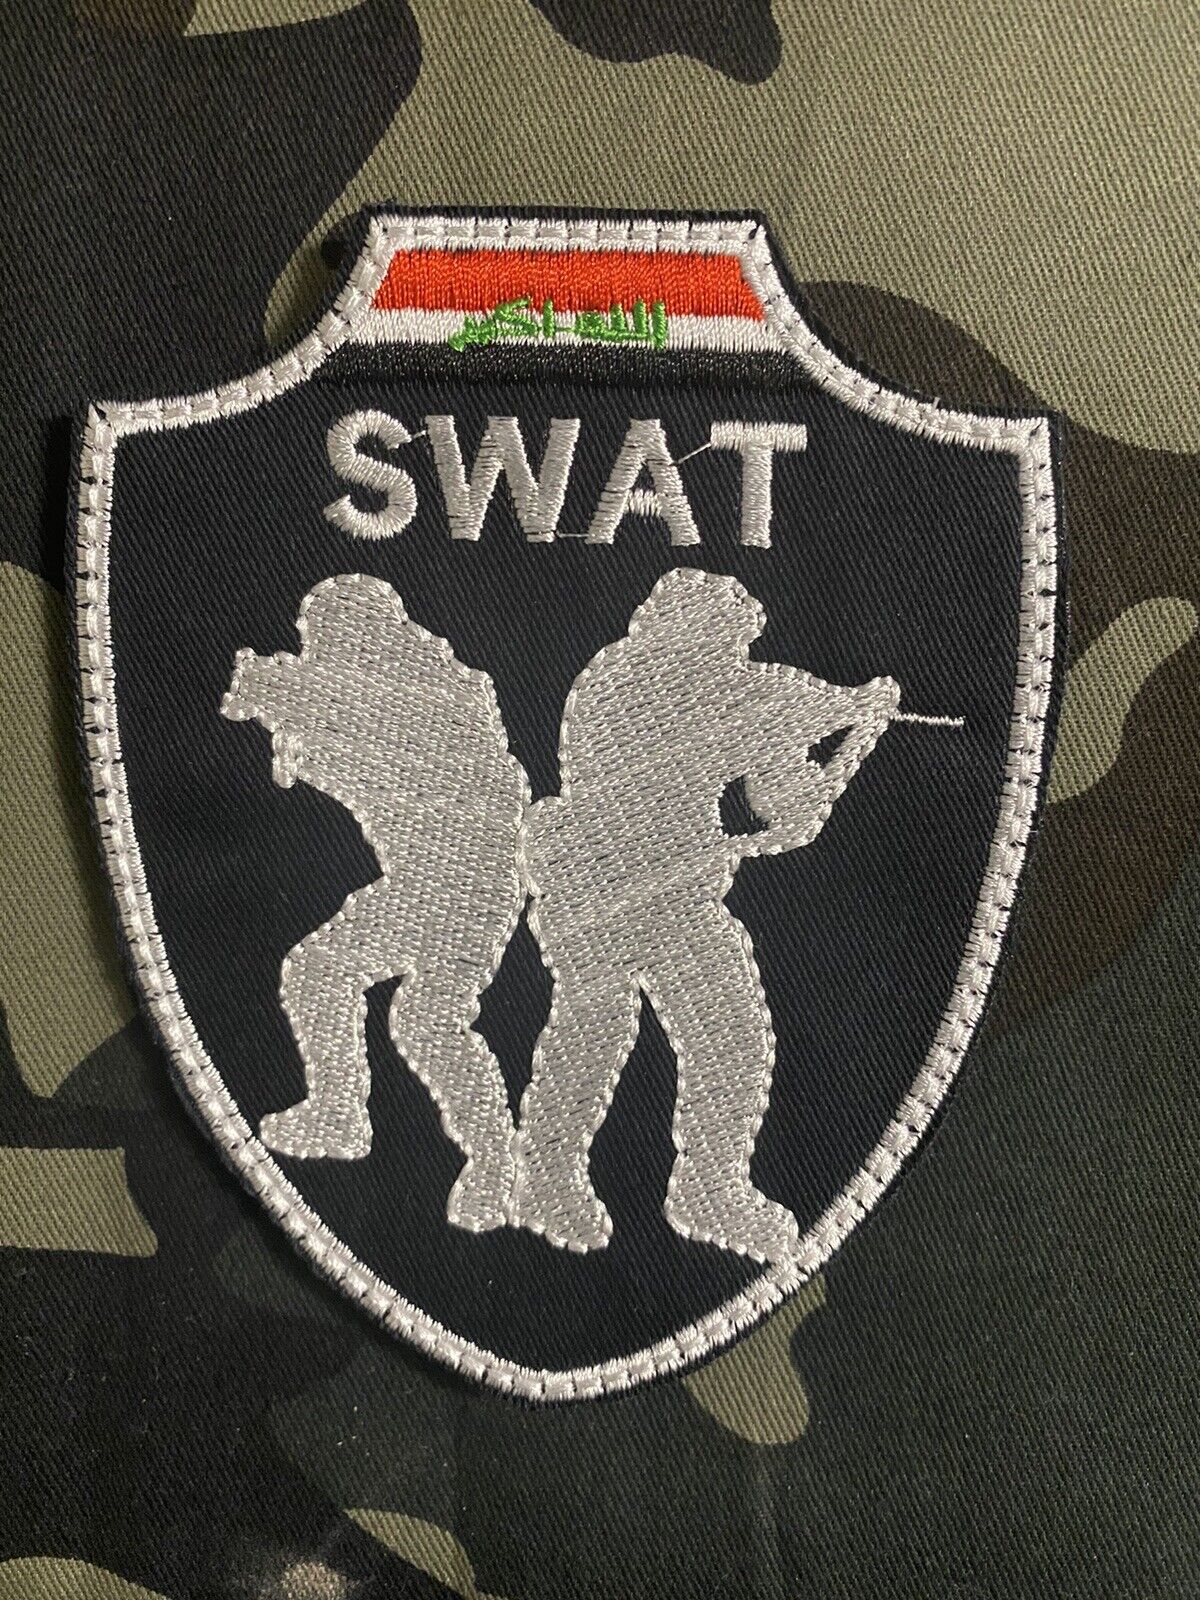 Iraqi SWAT Arm Patch, Black Cotton Backed Hook Side Fastener.